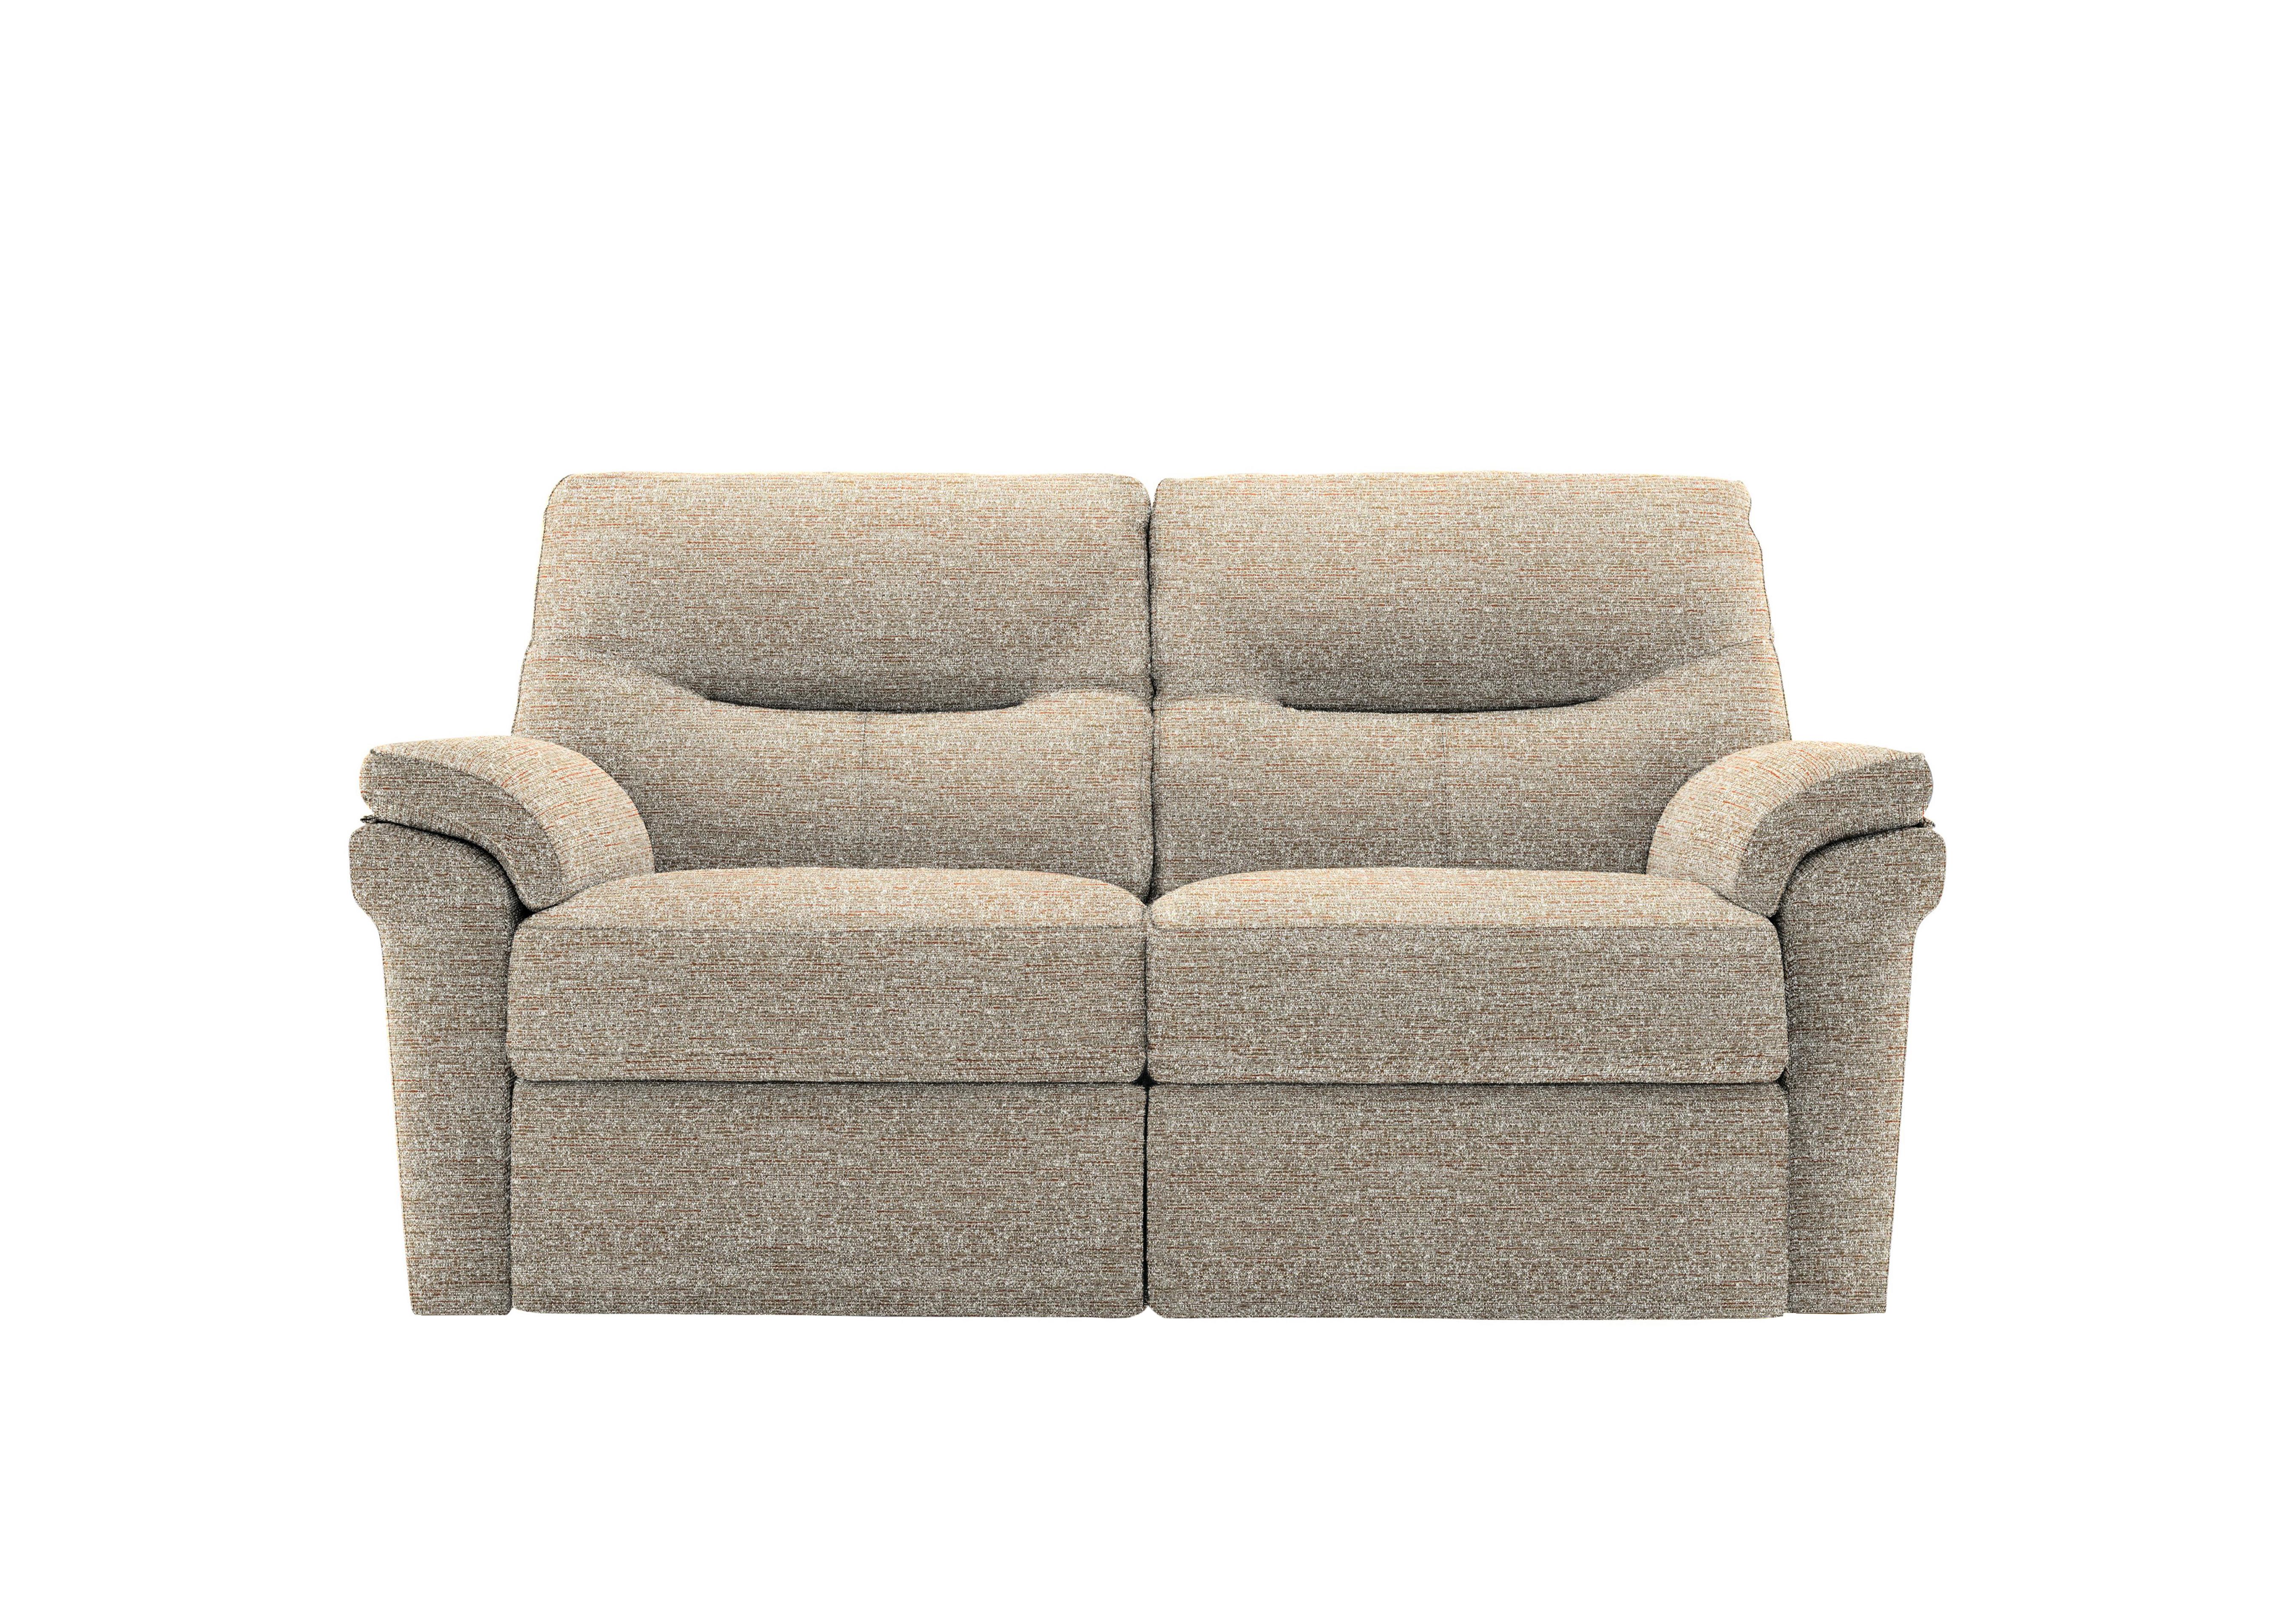 Seattle 2 Seater Fabric Sofa in C030 Kampala Beige on Furniture Village